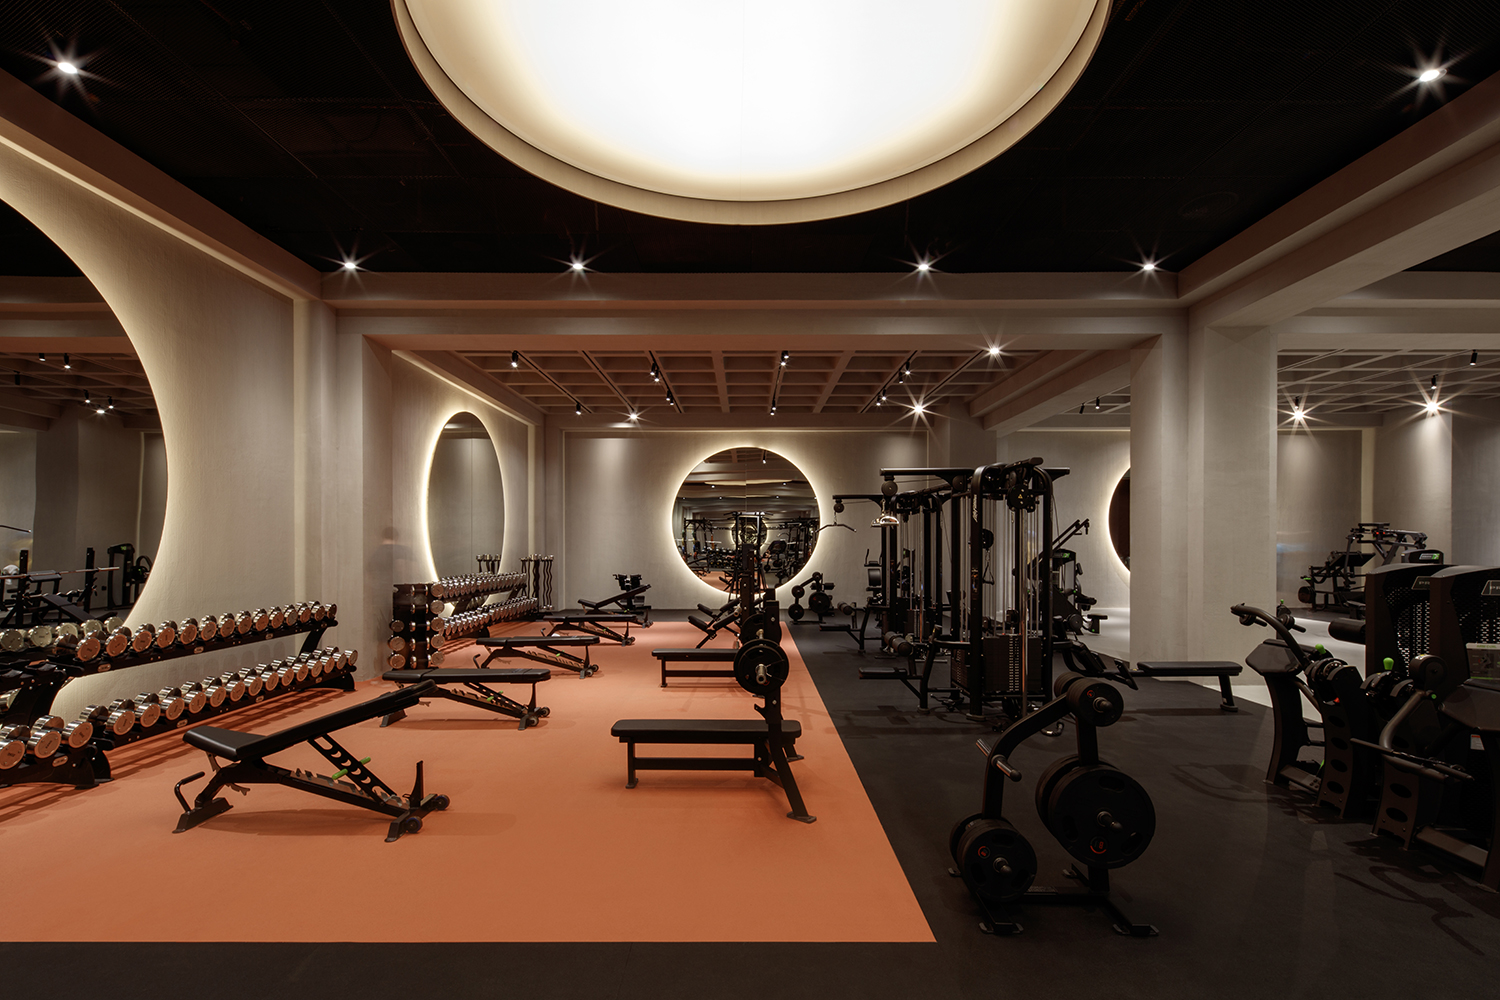 Springs Warehouse Gym, Dubai, UAE / VSHD Design